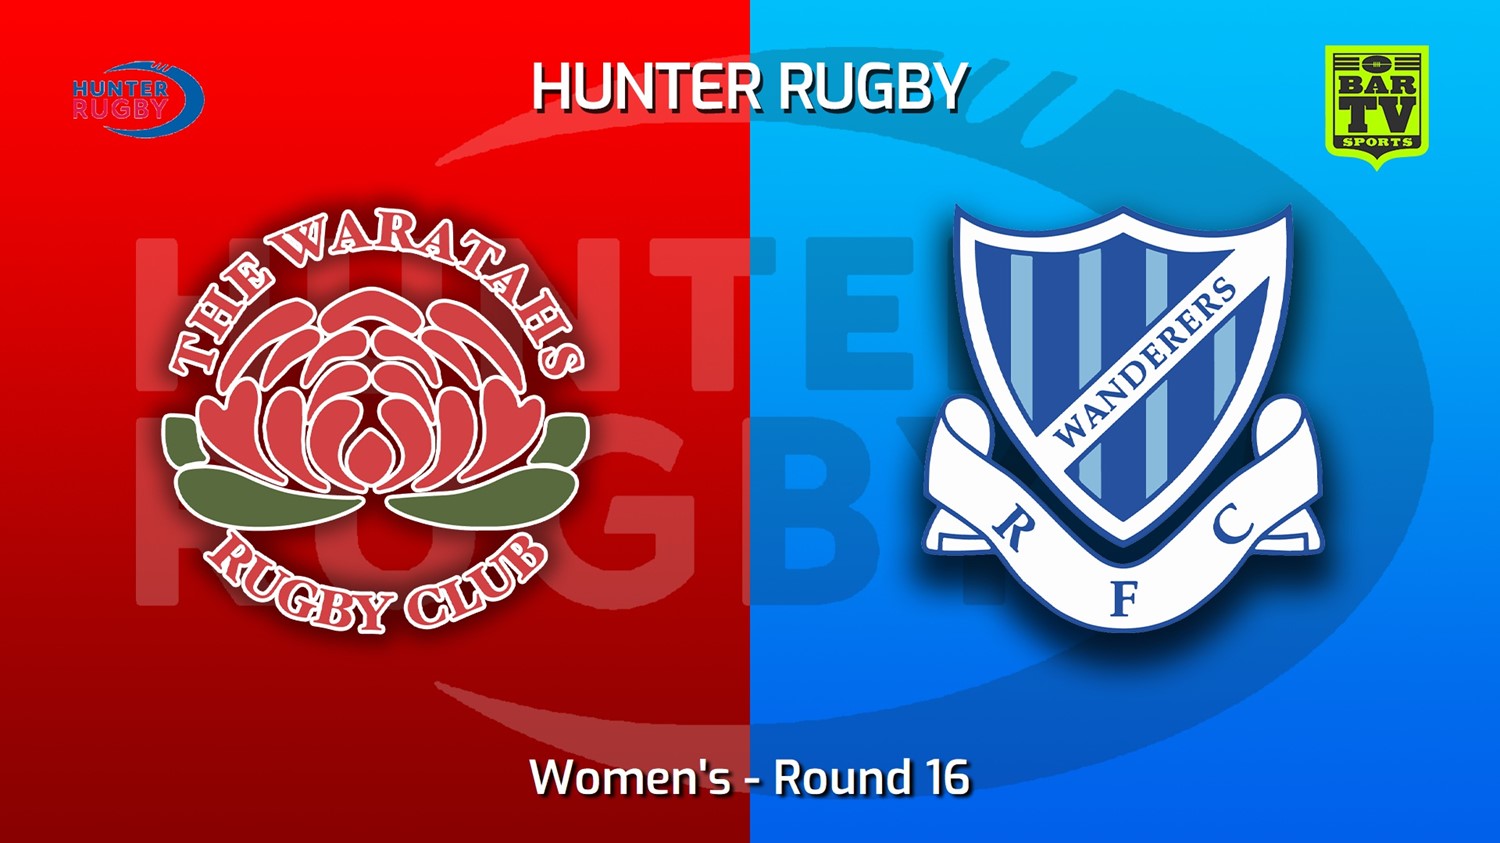 220813-Hunter Rugby Round 16 - Women's - The Waratahs v Wanderers Slate Image